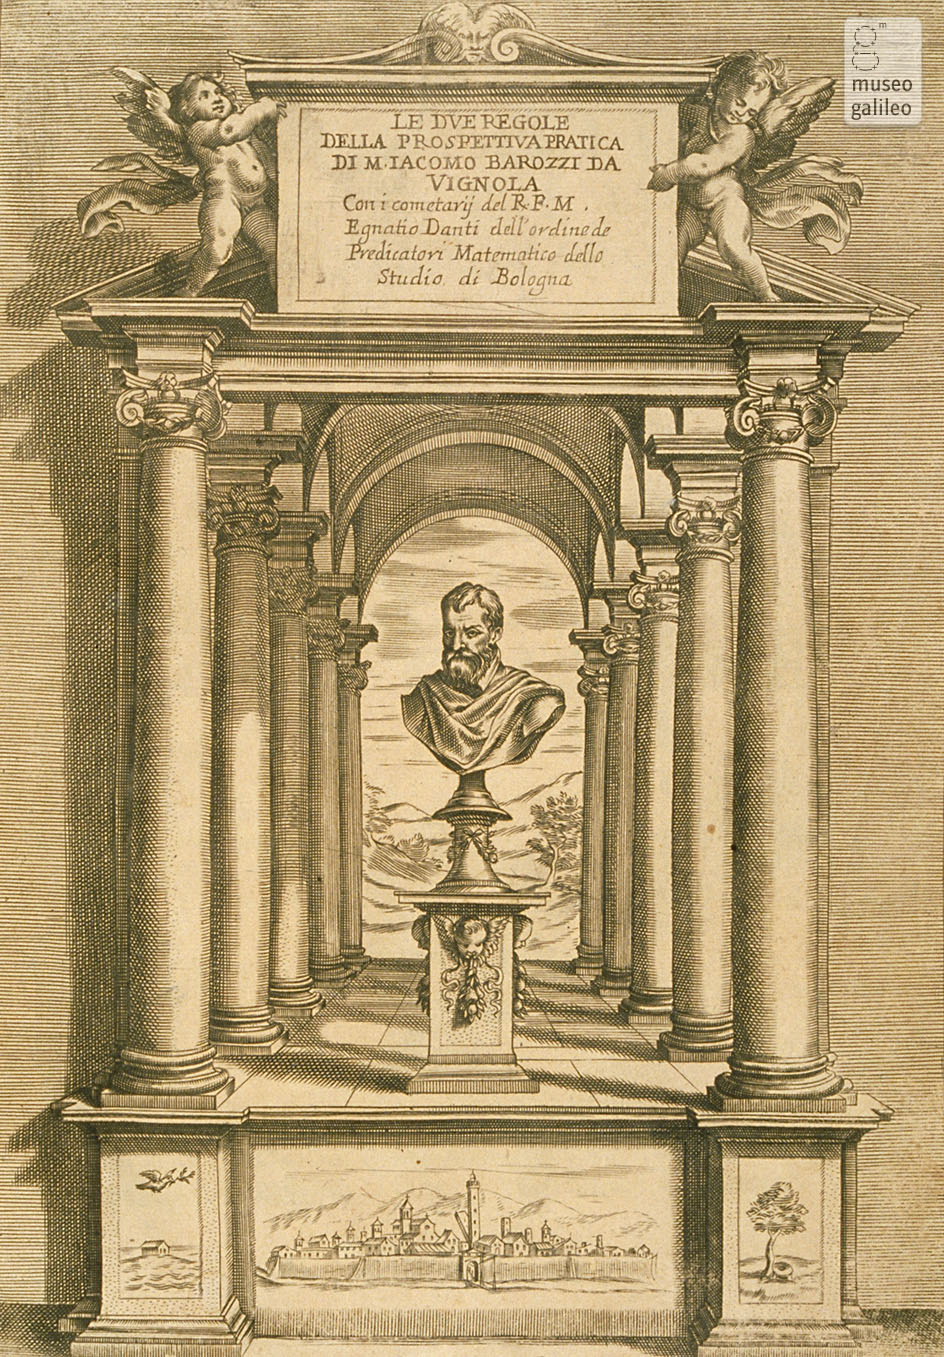 Jacopo Barozzi from Vignola